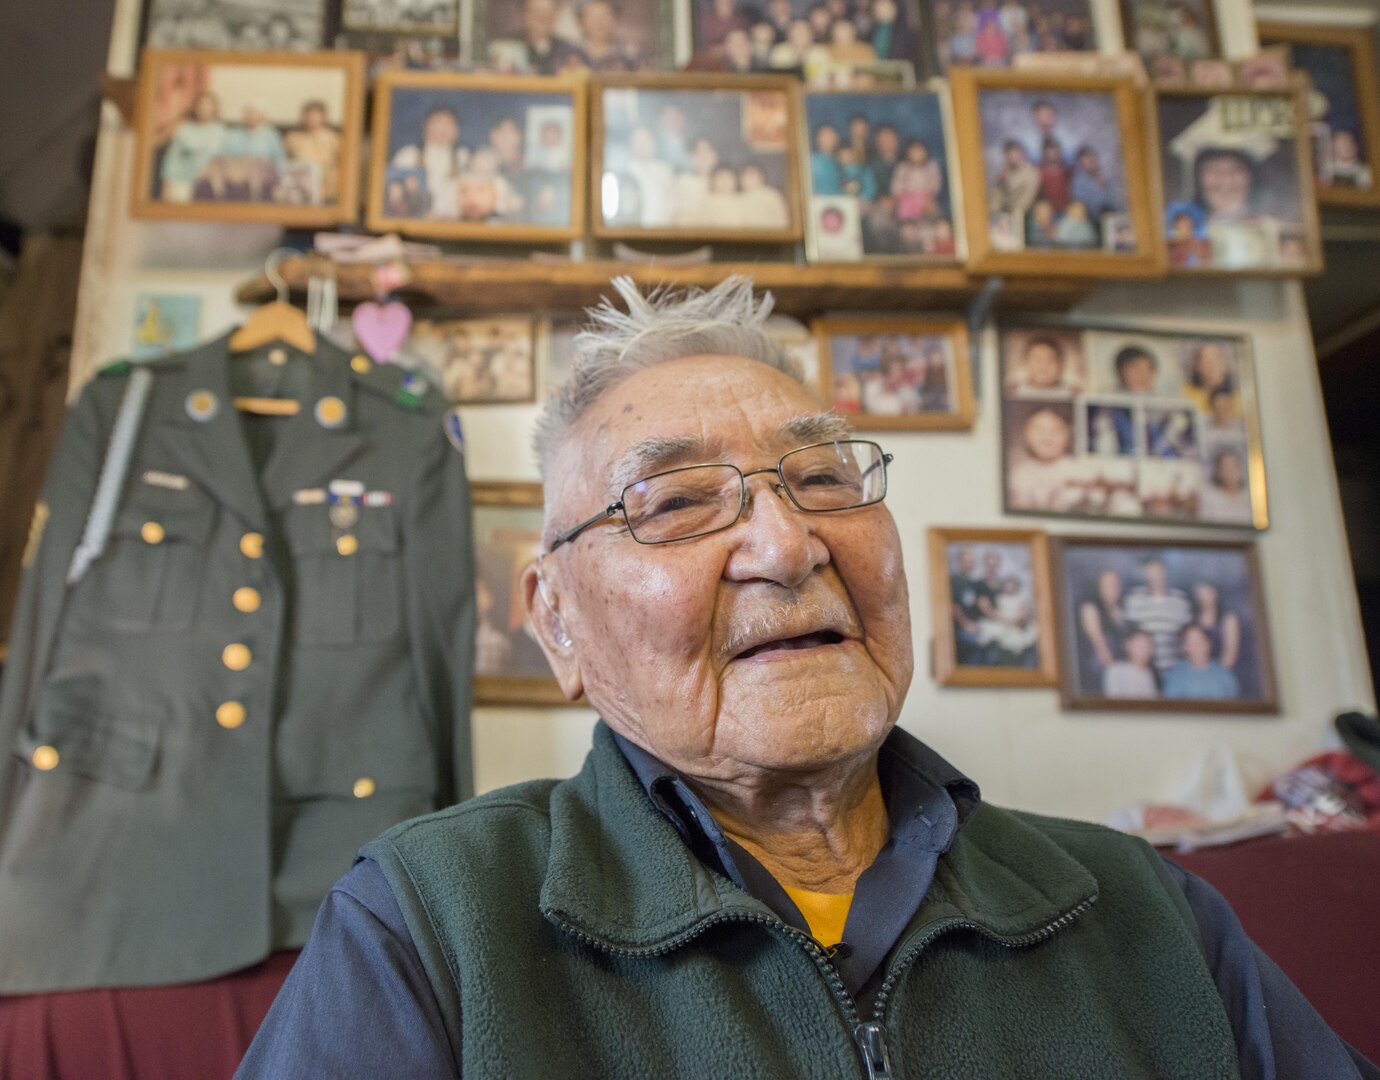 Kwethluk, Alaska - Retired Sgt. 1st Class Sam Jackson, who served in the Alaska Territorial Guard during World War II, poses for a photo inside his home in Kwethluk, Alaska, Sept. 23, 2017.